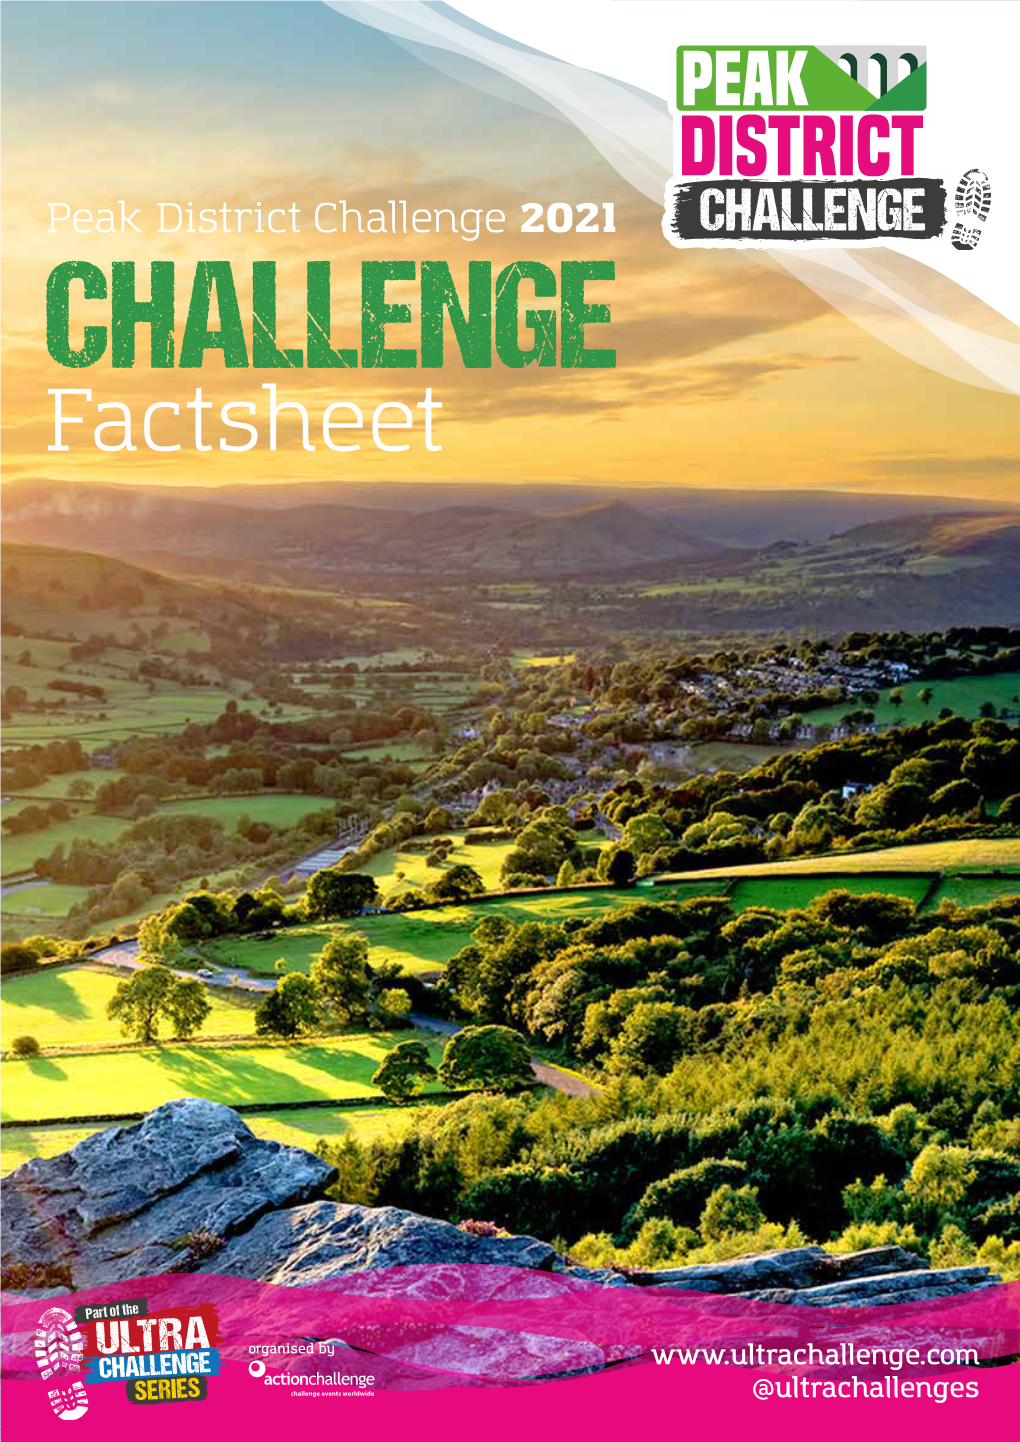 Peak District Challenge 2021 CHALLENGE Factsheet